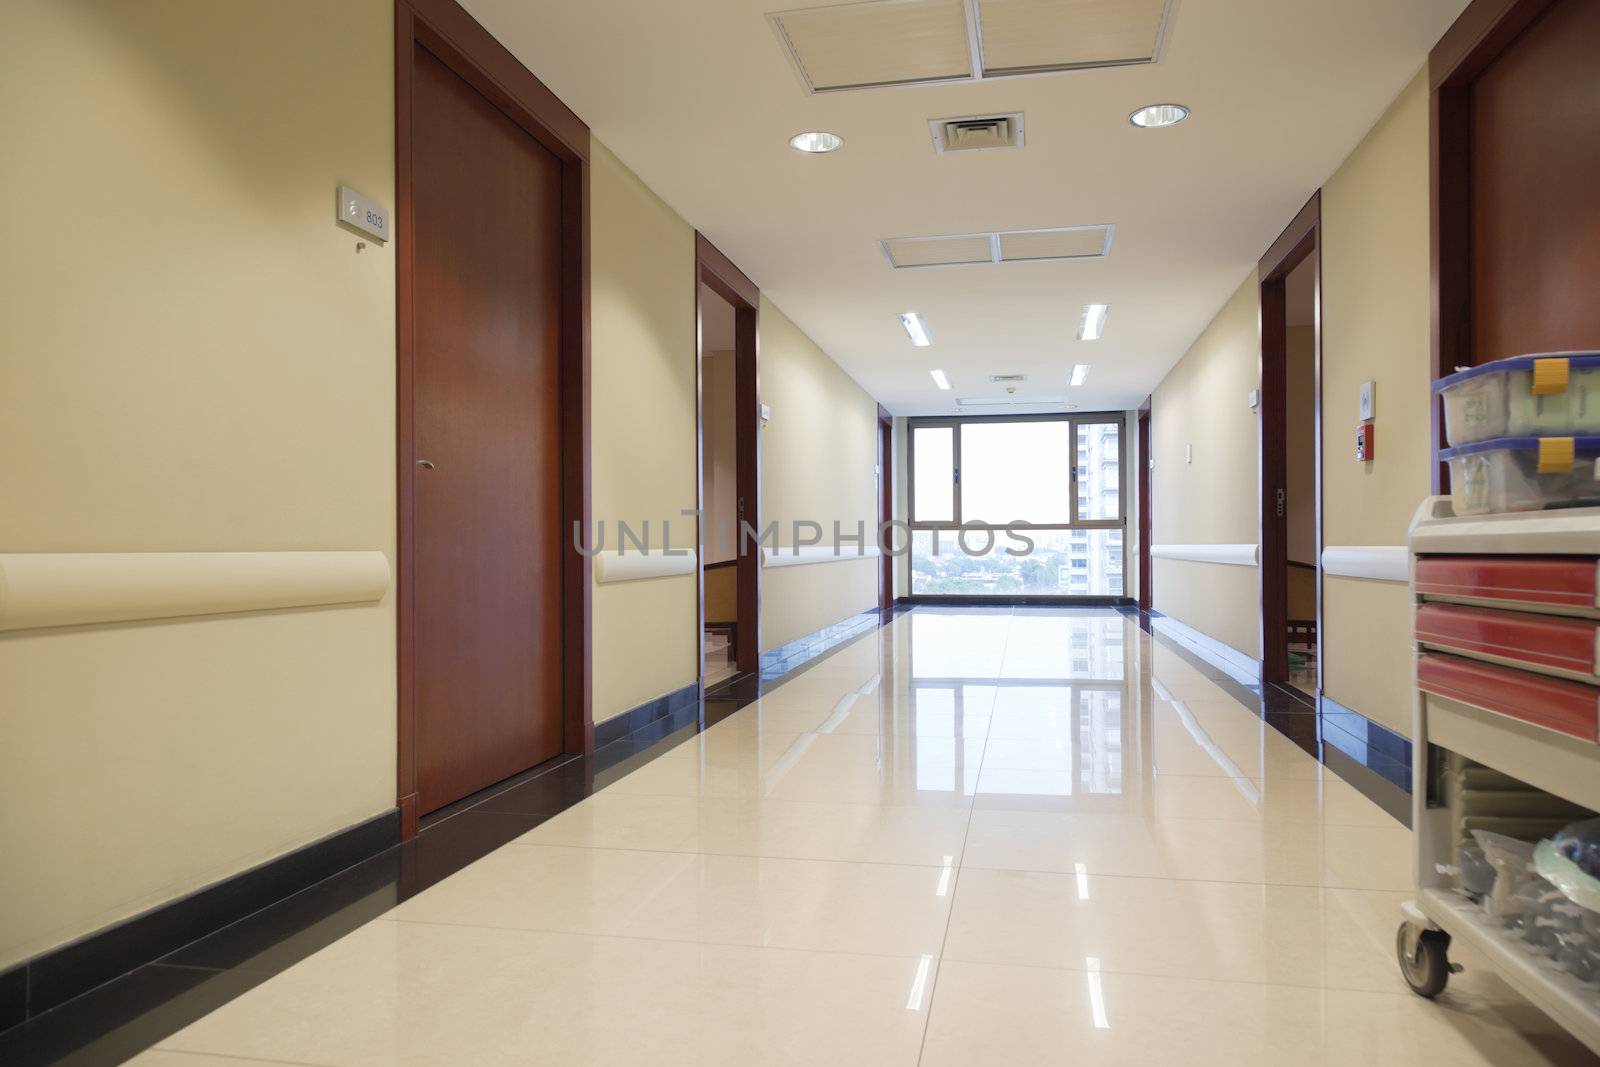 Empty passageway of hospital by leaf